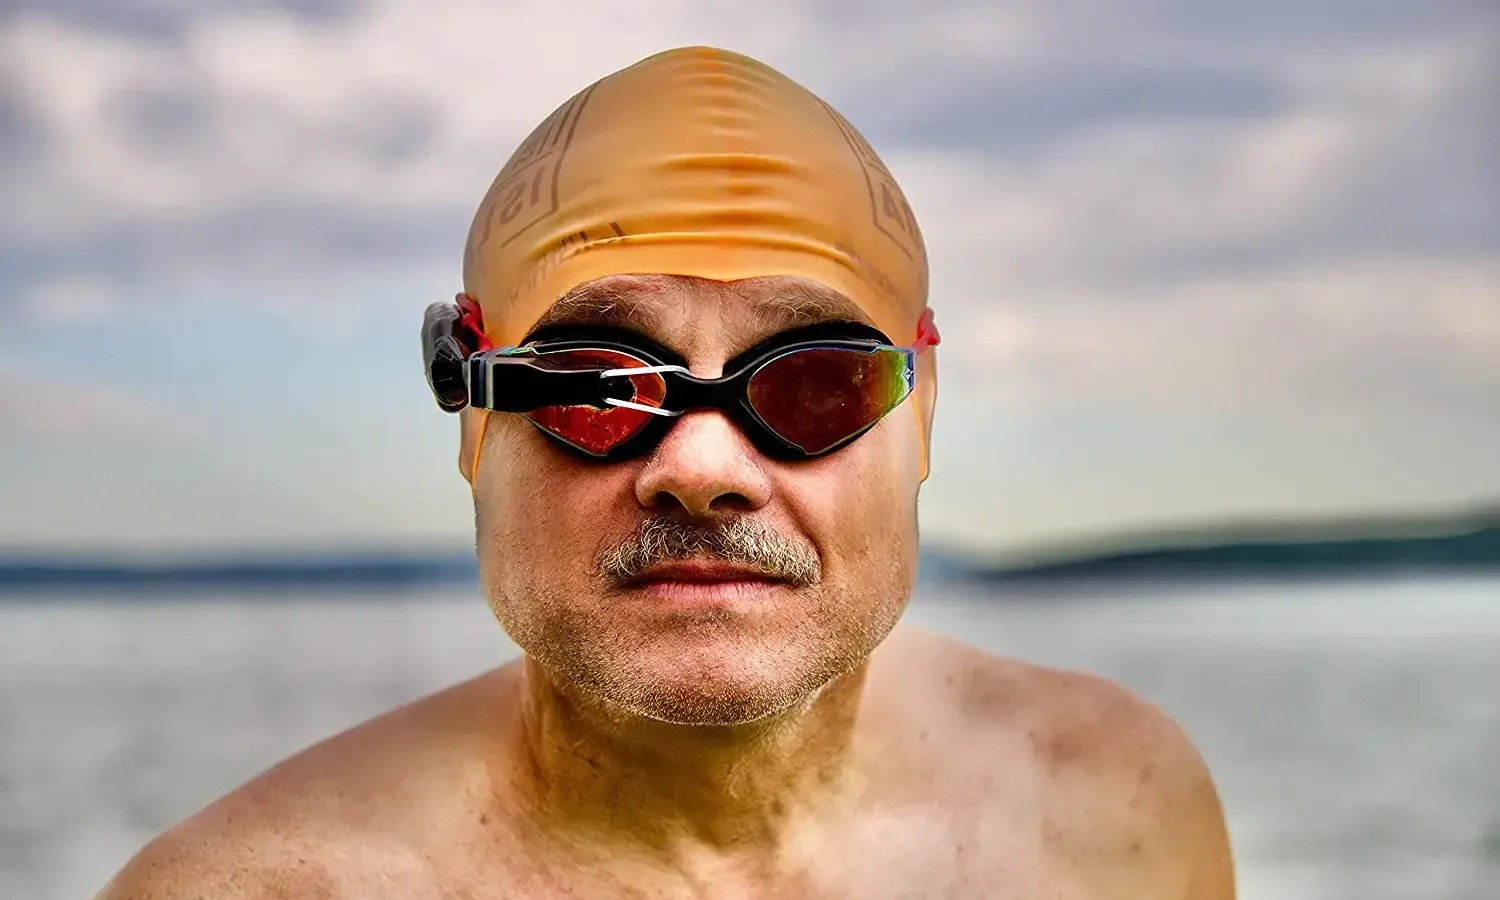 vuzix-ar-swim-goggles-used-for-tactical-scuba-diving